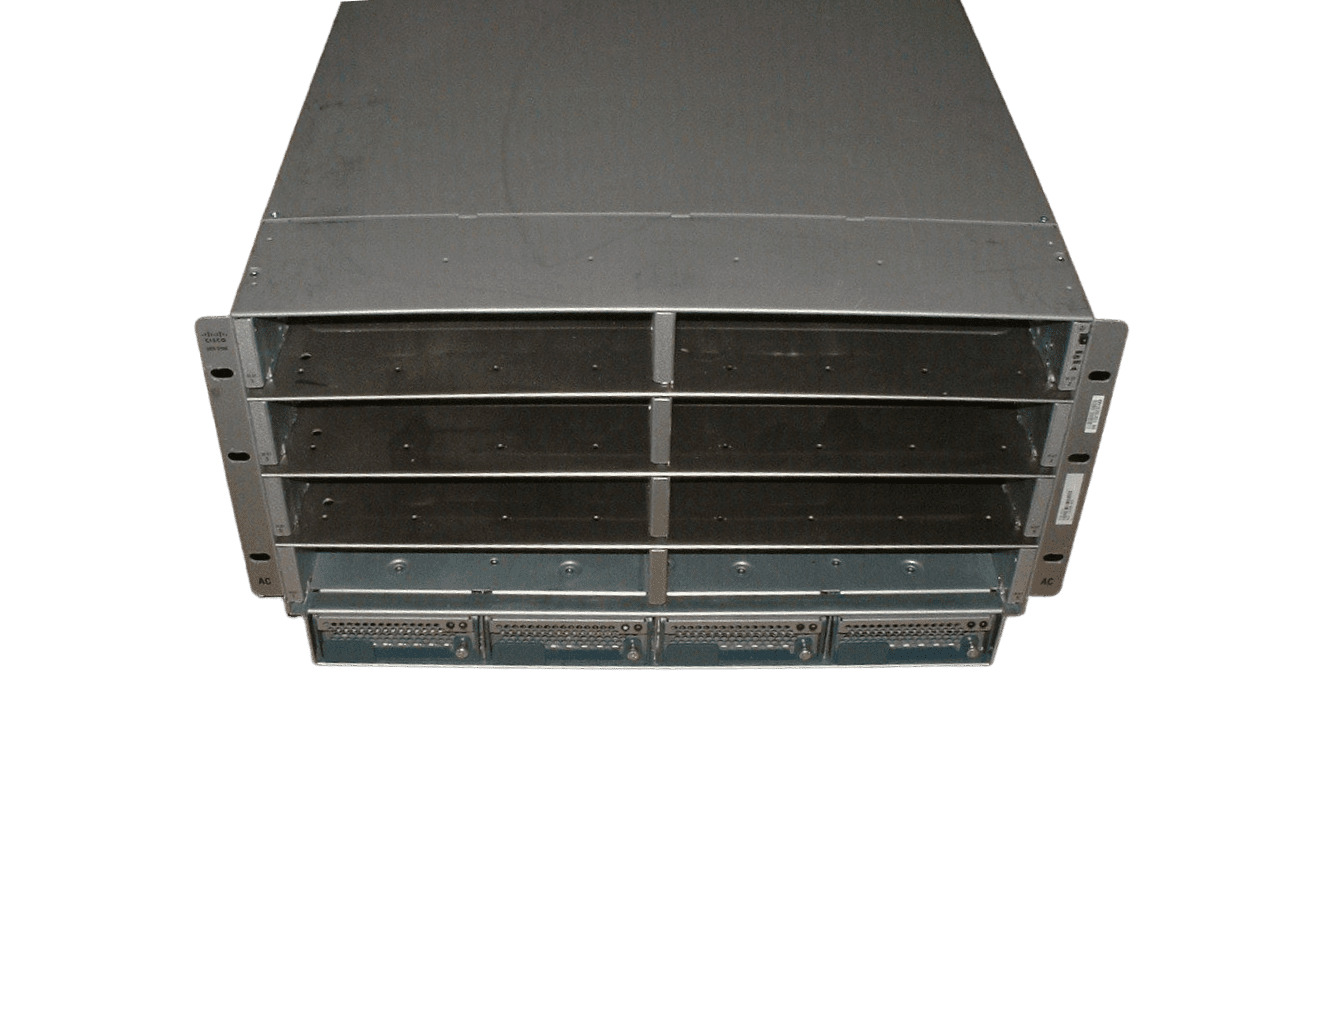 Cisco UCS 5108 Blade Server Chassis Enclosure N20-C6508 4x PSU 8x Fans 2x Fabric